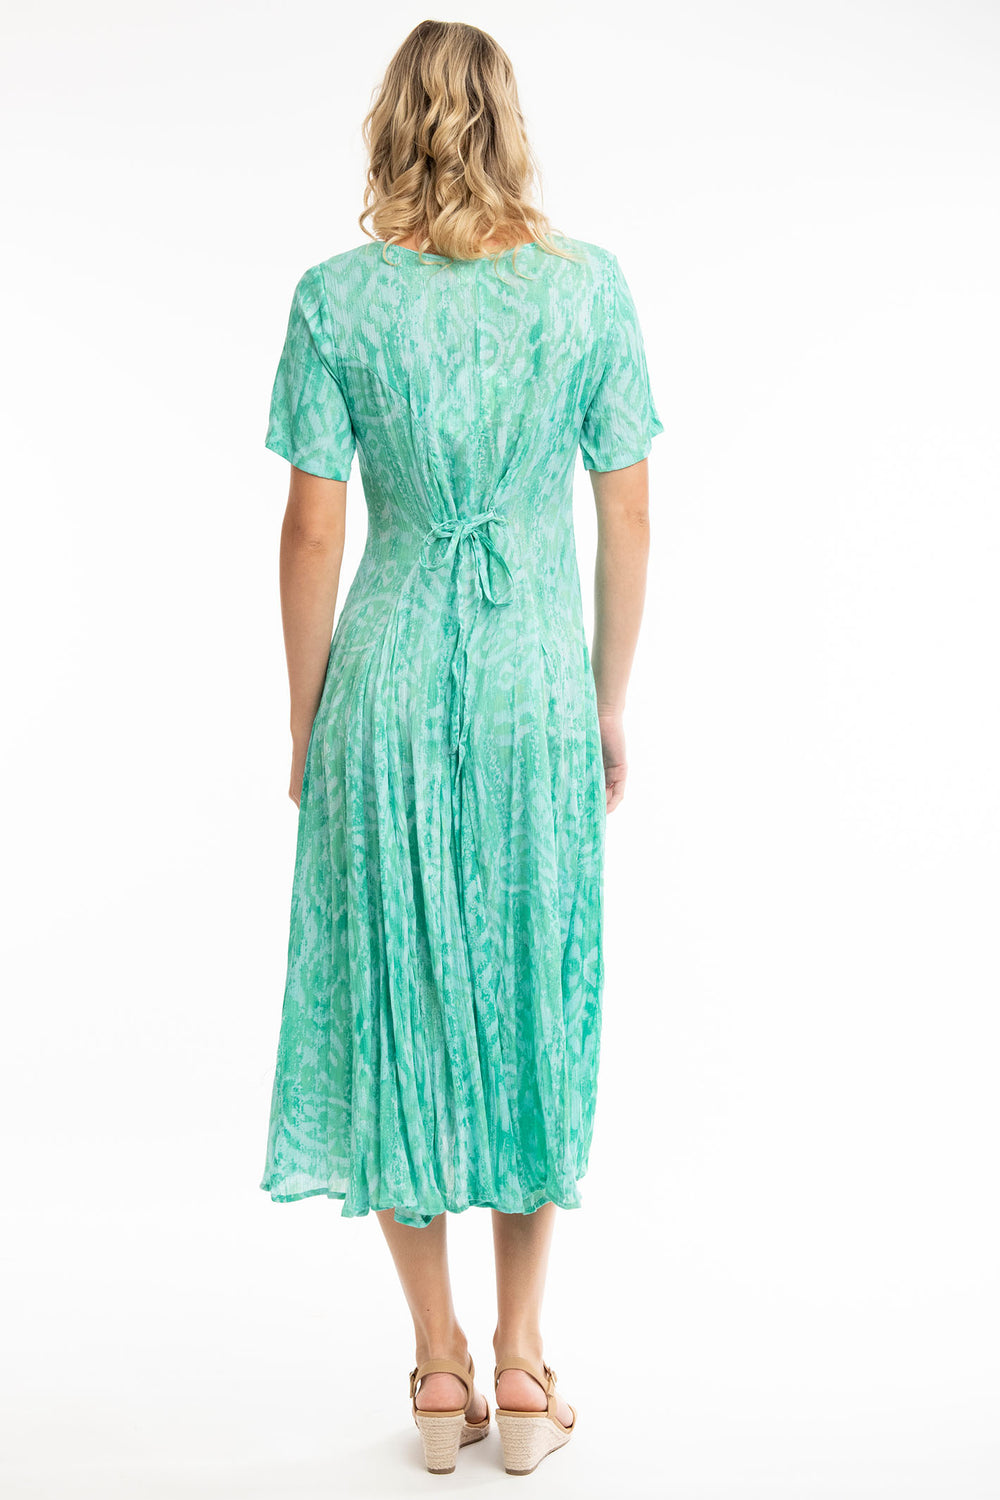 Orientique 4190 Olympus Blue Green Godet Sleeve Dress - Shirley Allum Boutique